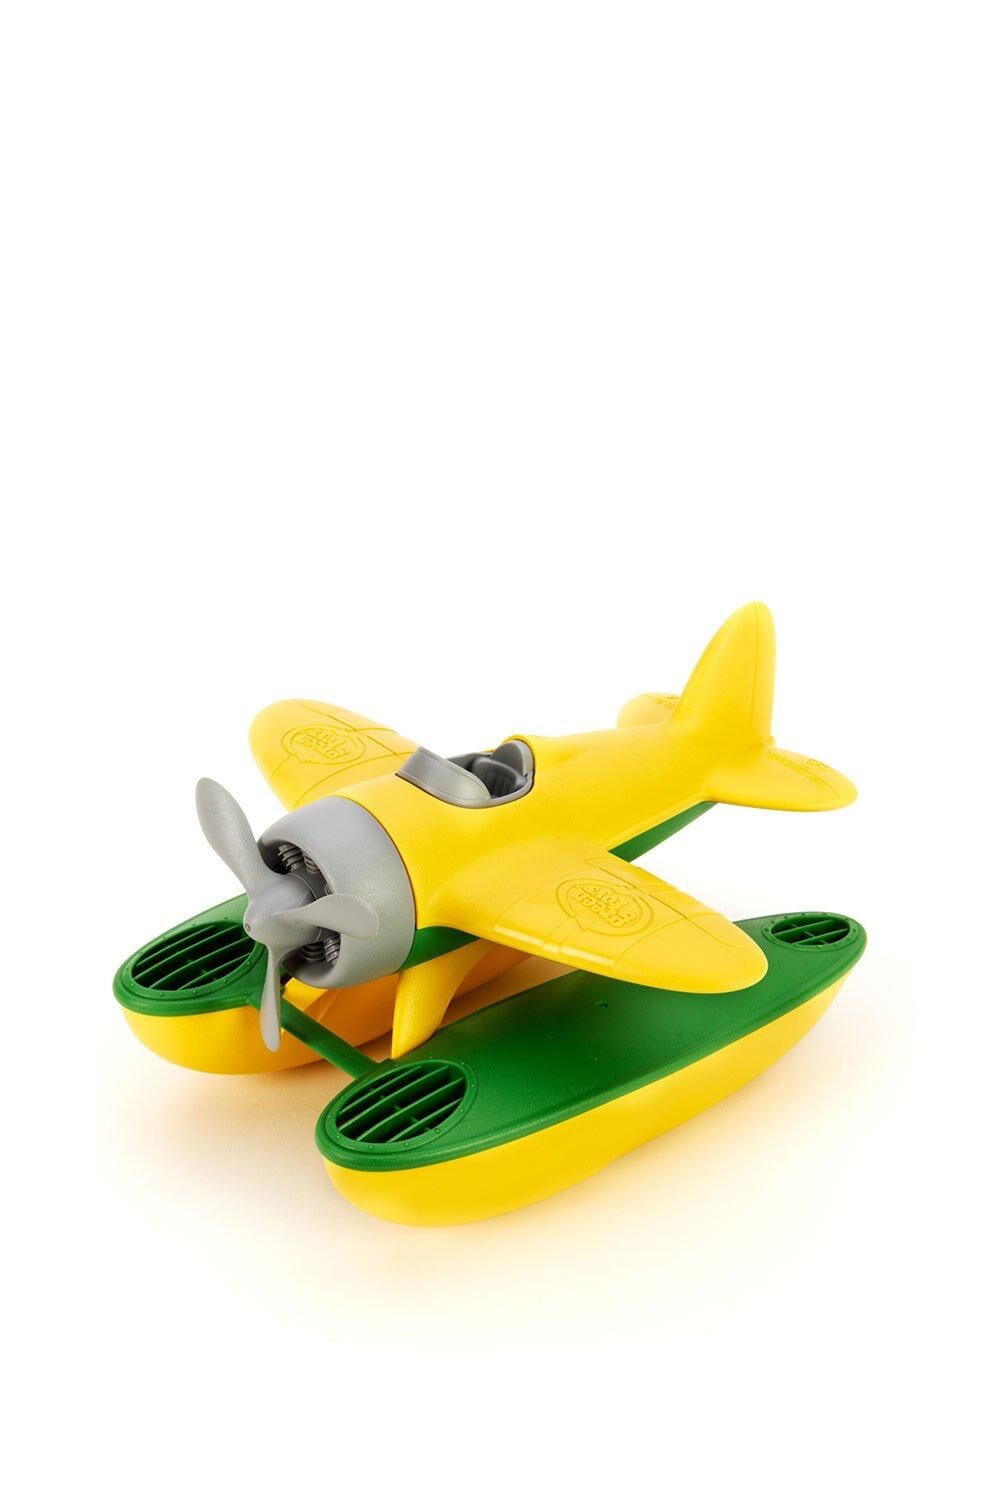 Green Toys Seaplane Water Toy